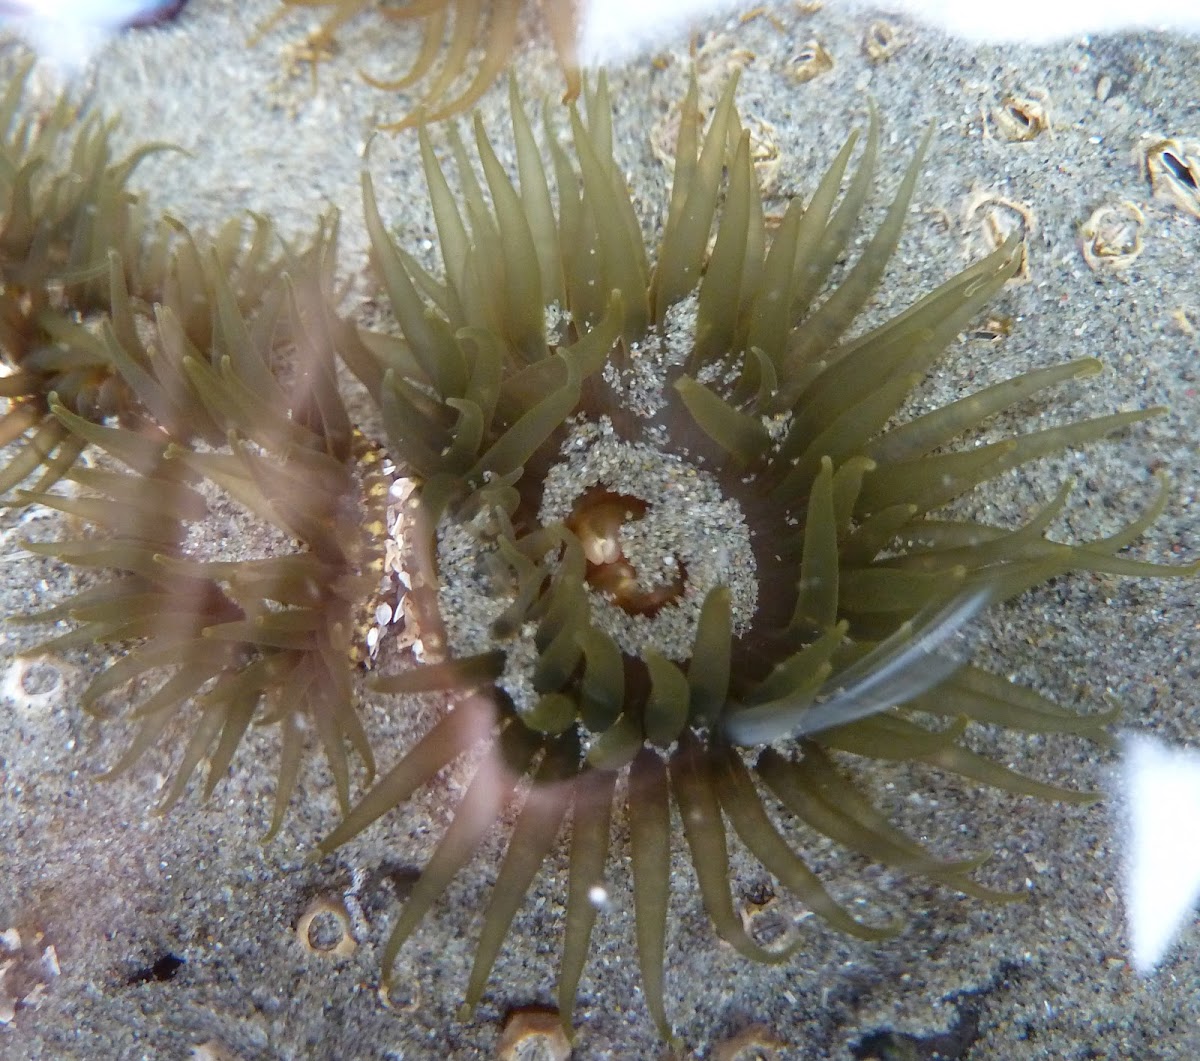 Green sea anemone